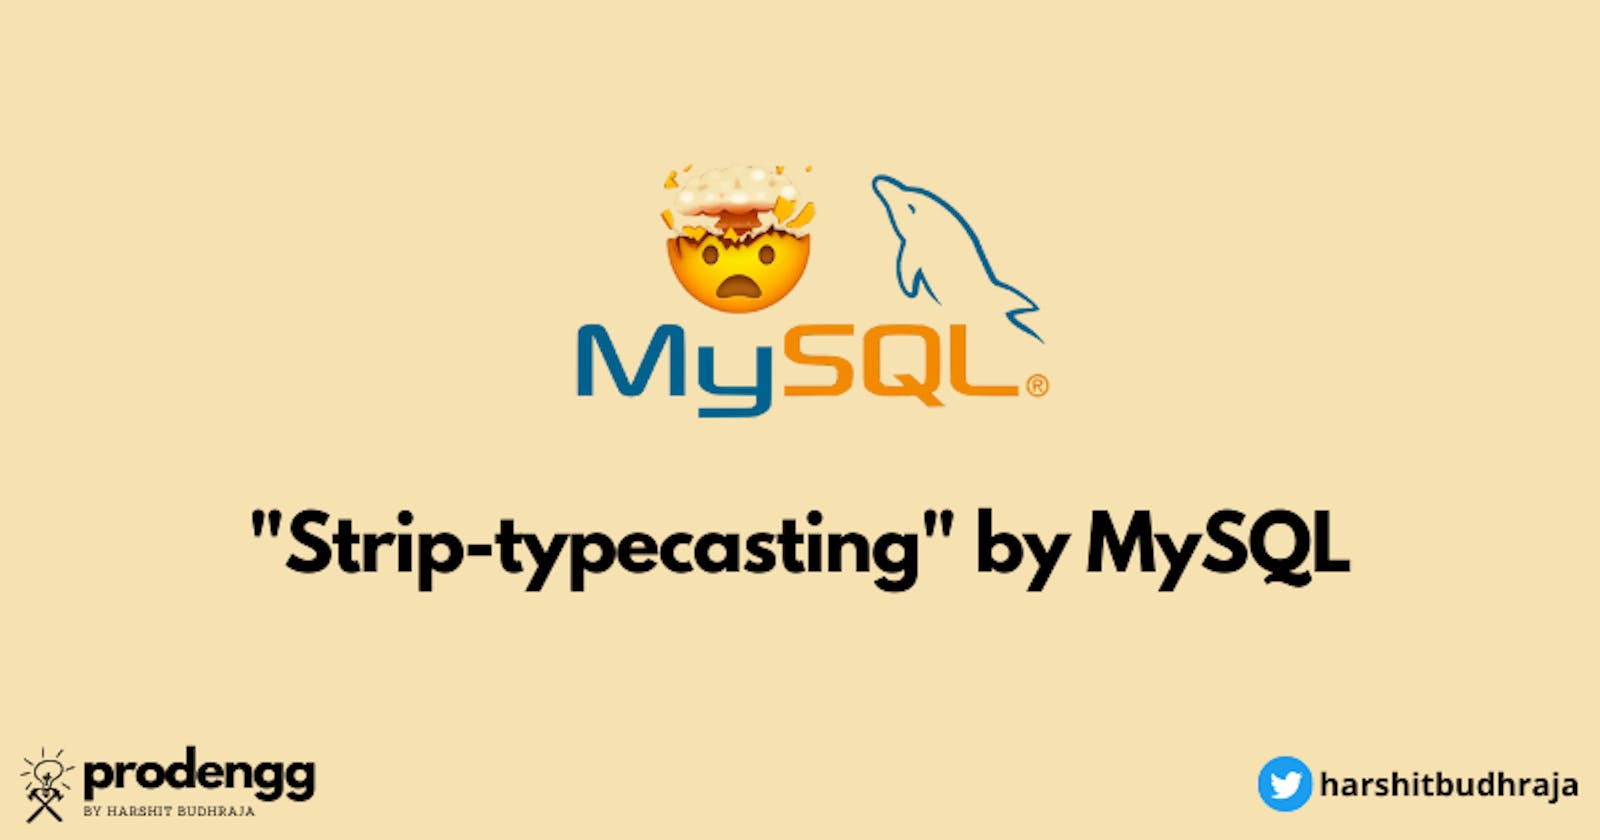 A tale of strip-typecasting in MySQL